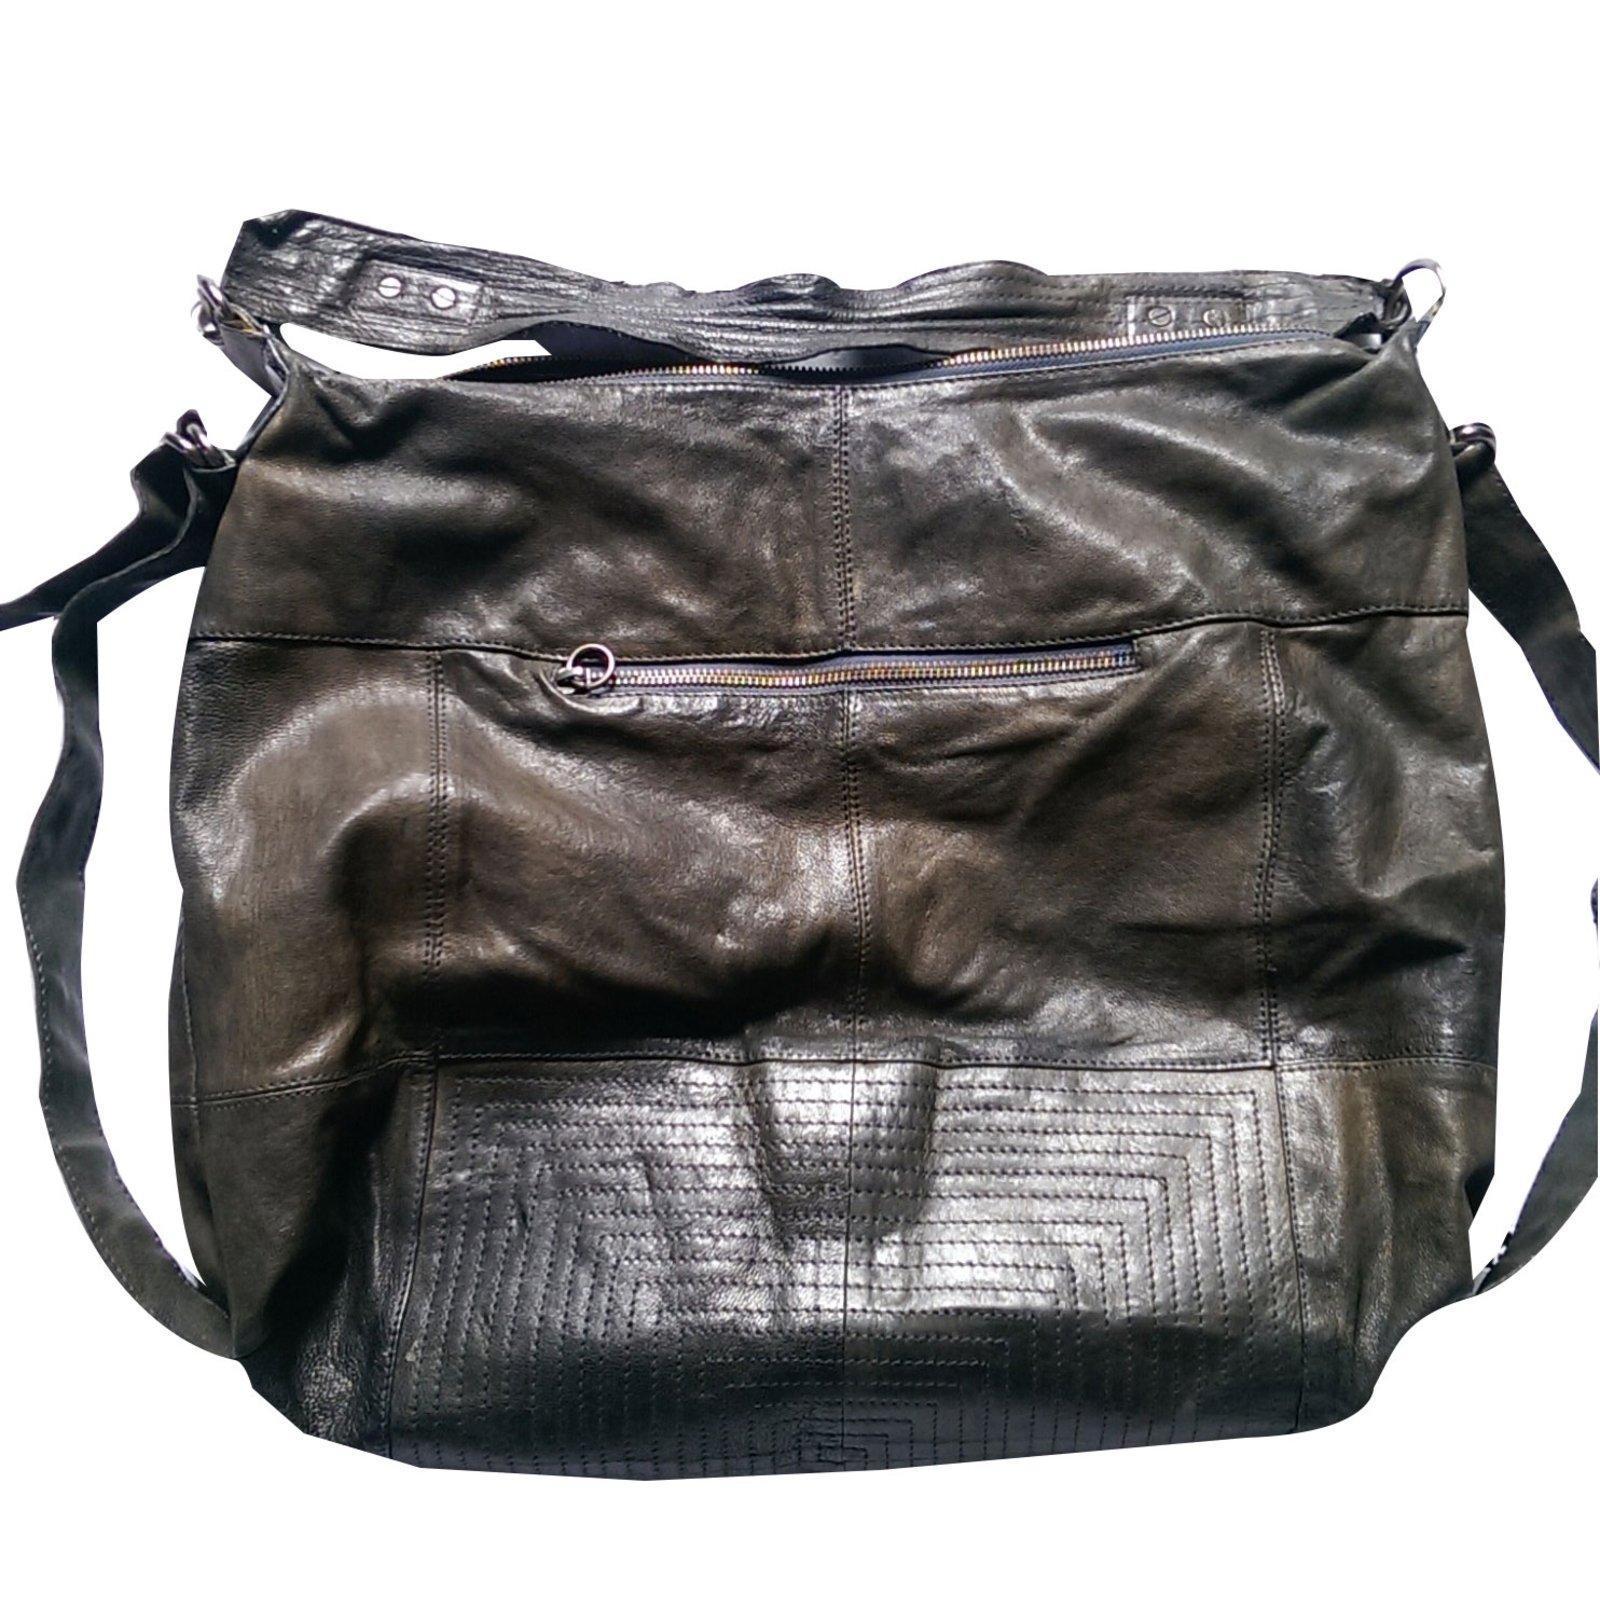 Bel Air leather handbag